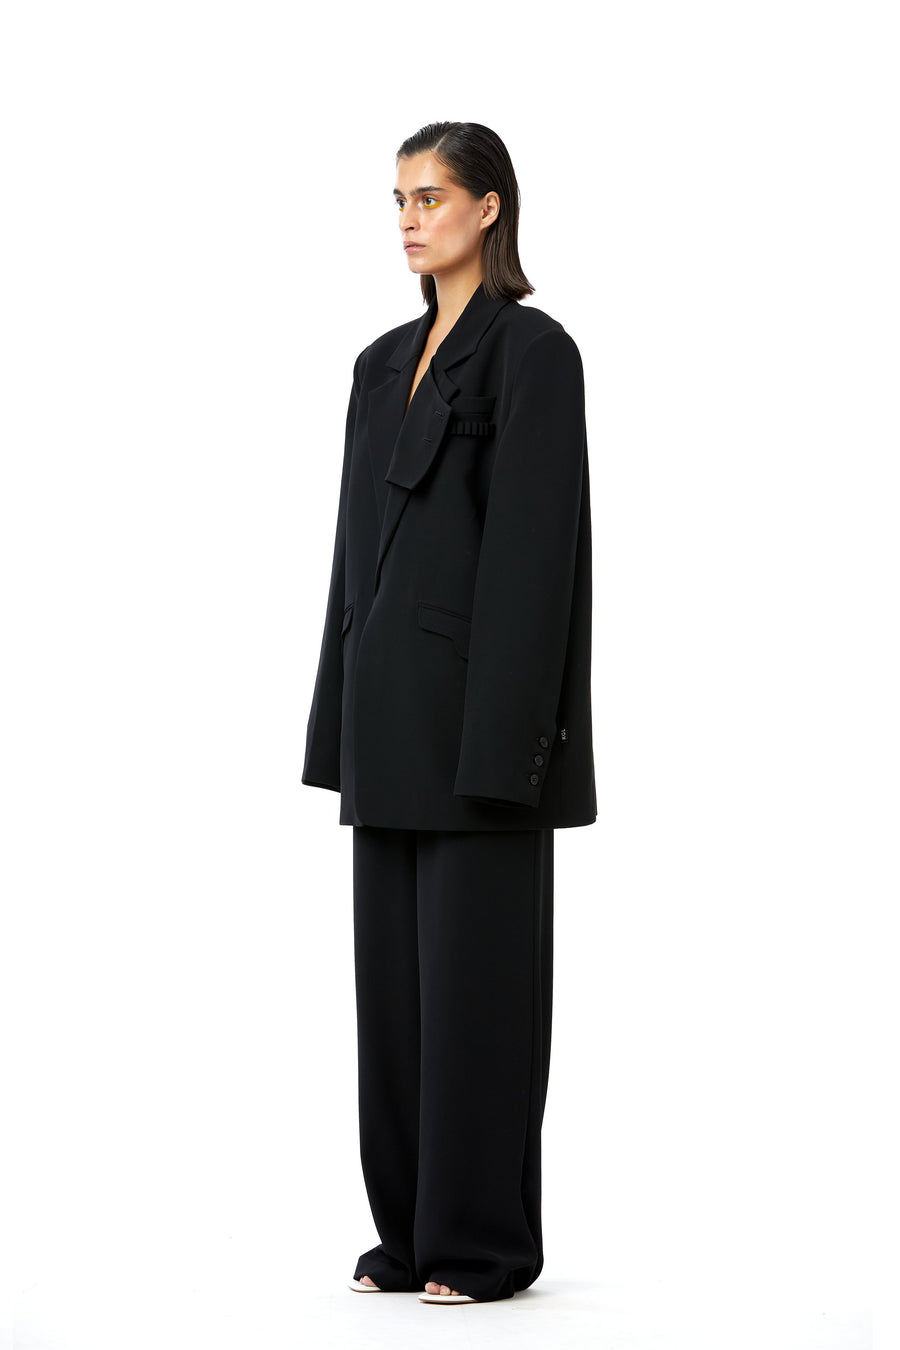 Flap overlay blazer matching pants - Kanika Goyal Label